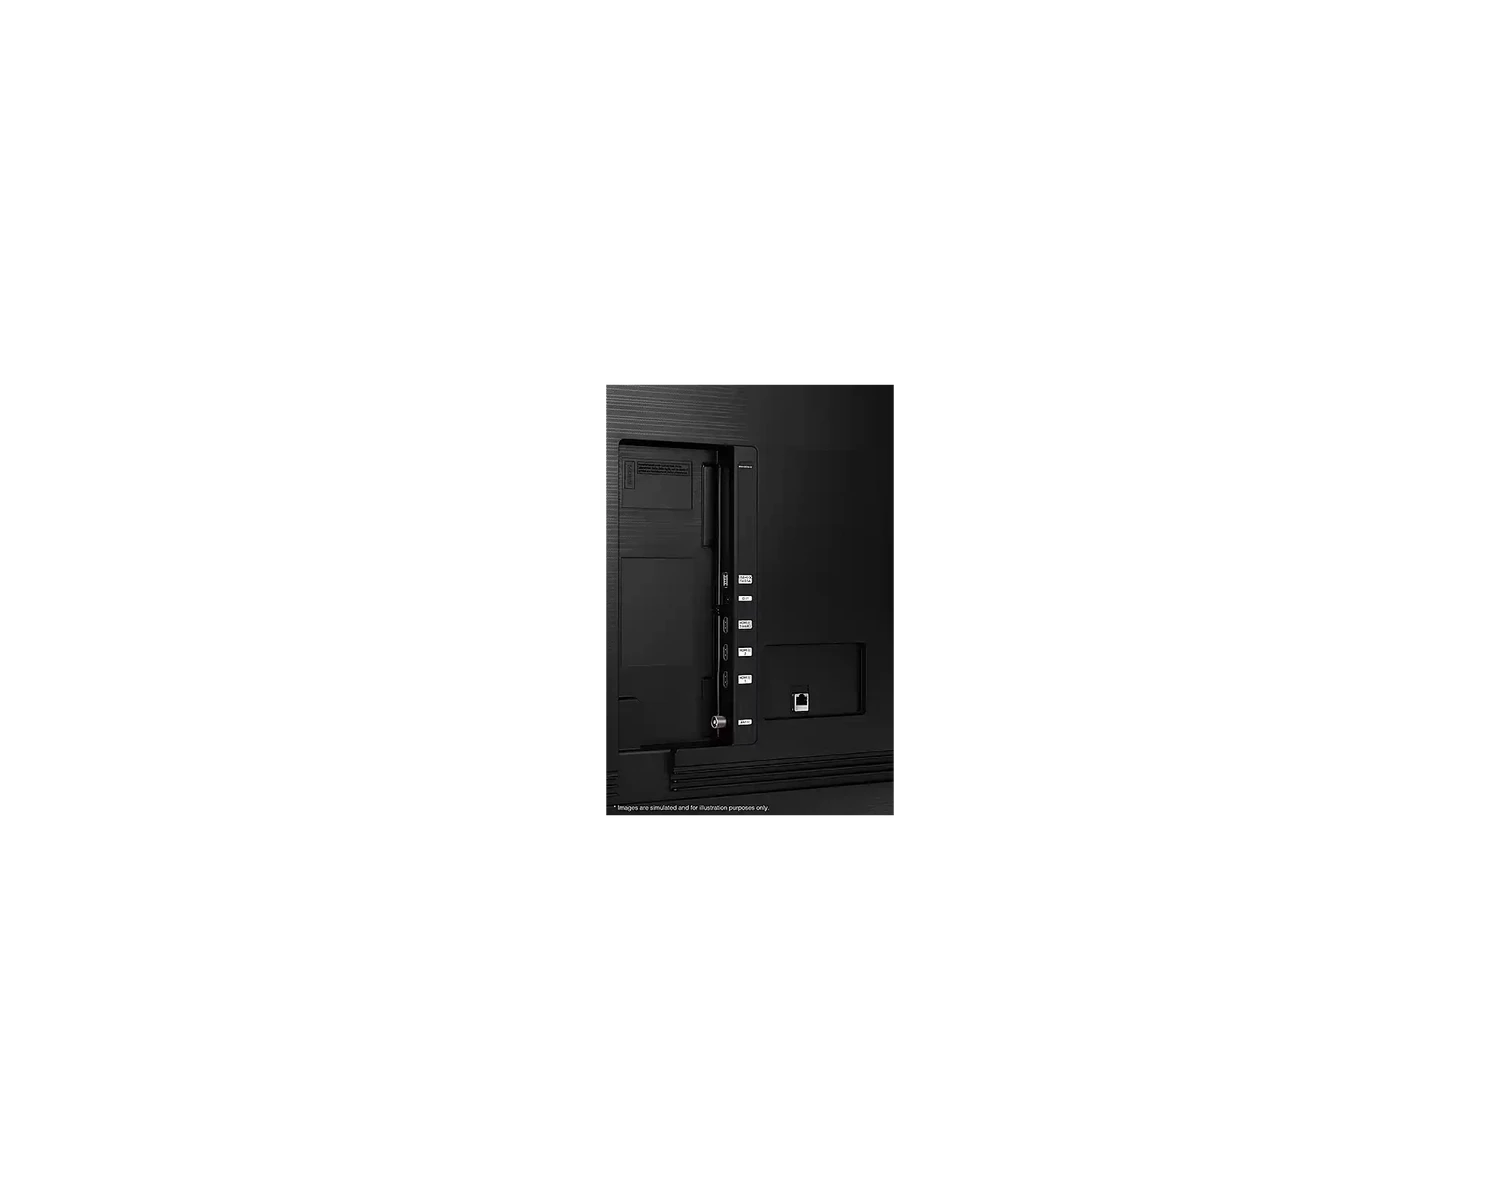 SAMSUNG 50" Crystal UHD 4K Smart LED TV UA50CU7700 thumbnail